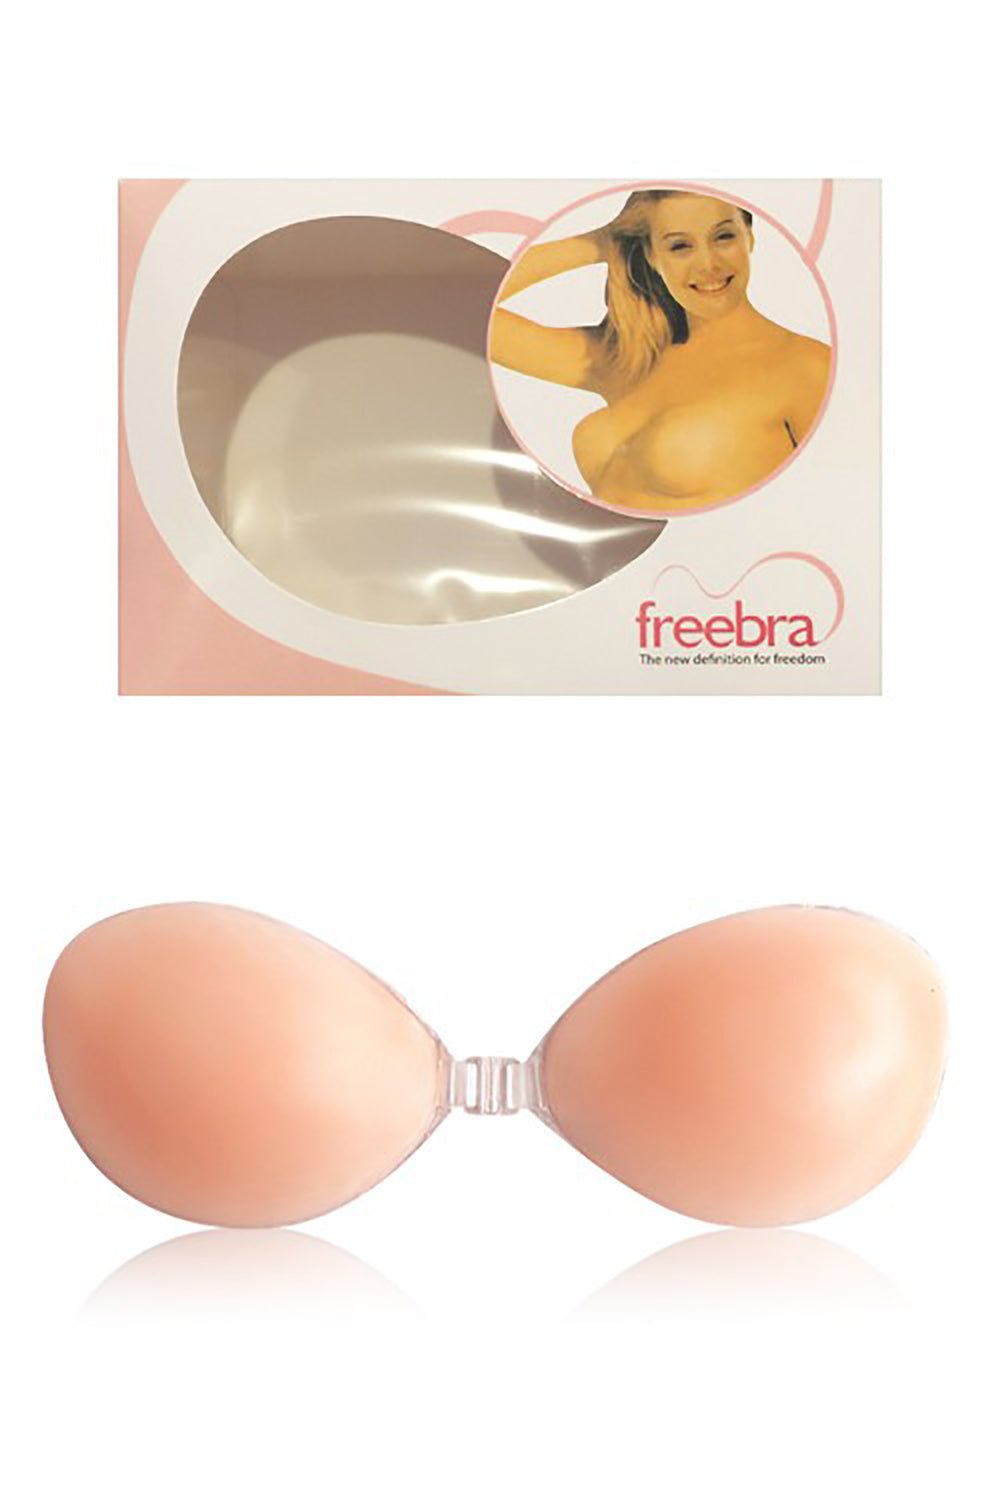 with strap)COD free bra silicone bra makapal nu bra with box